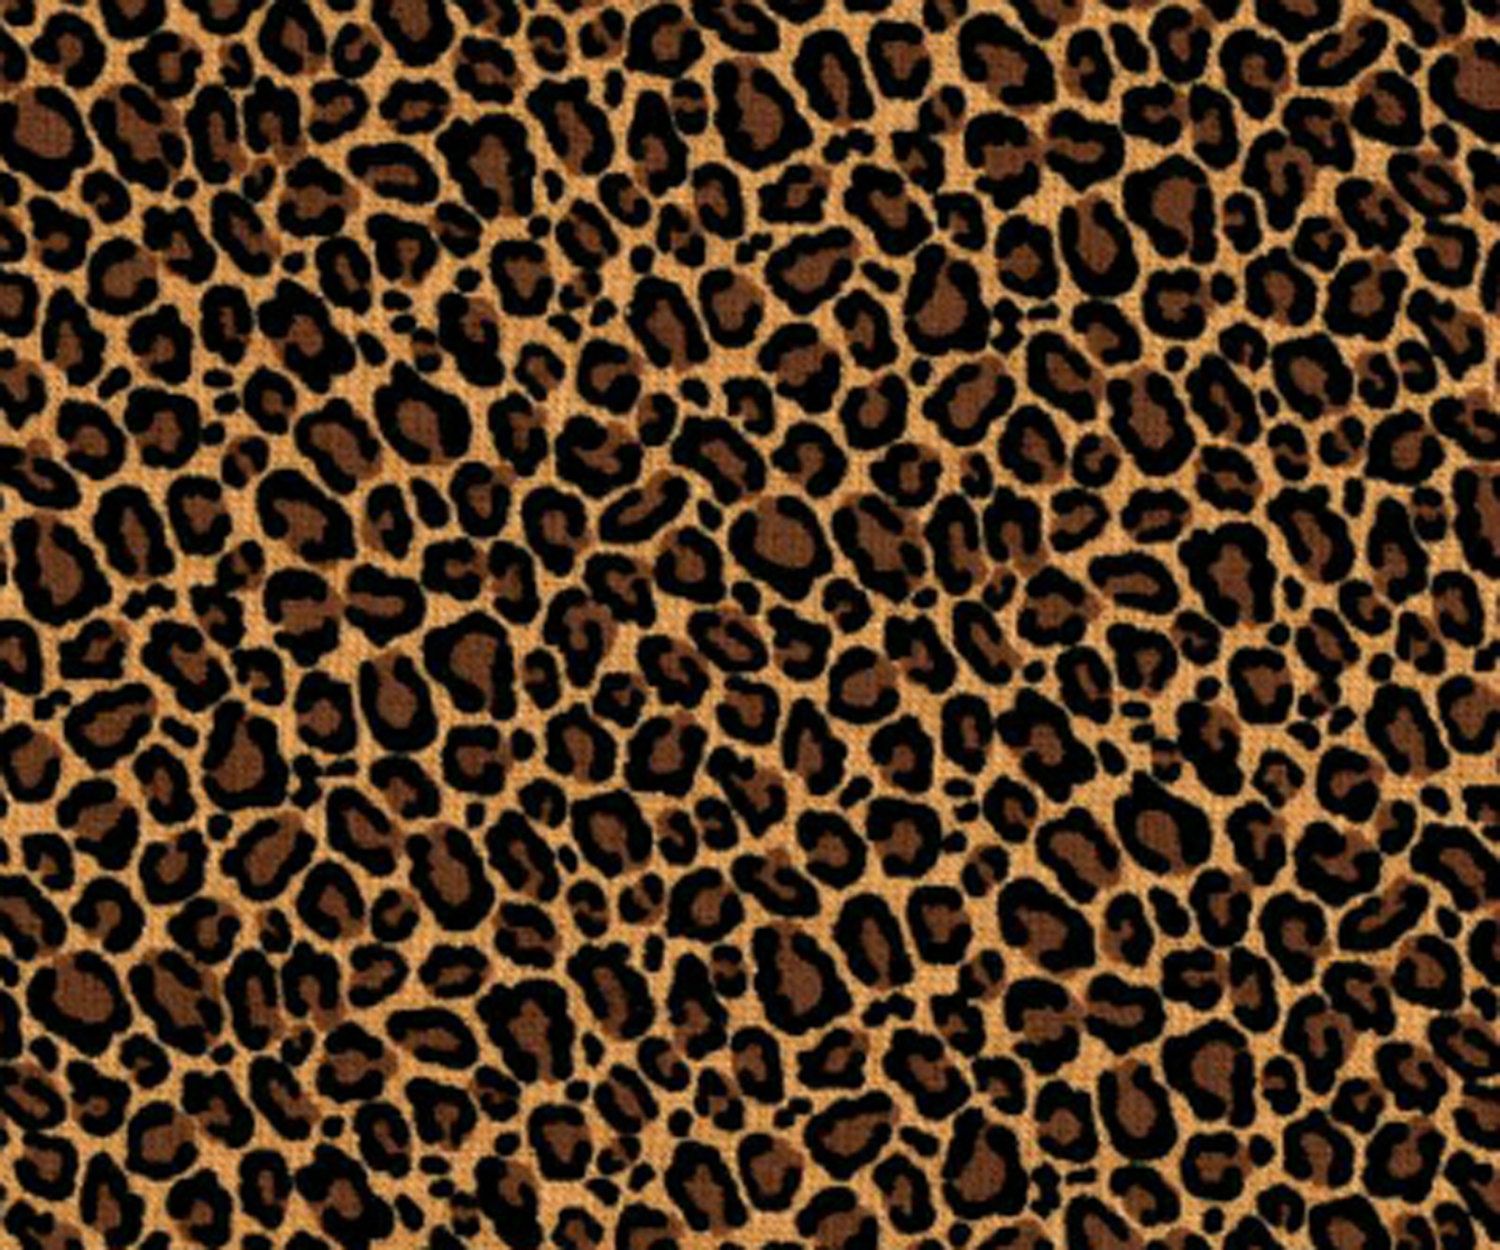 11269 Leopard pattern Vector Images  Depositphotos